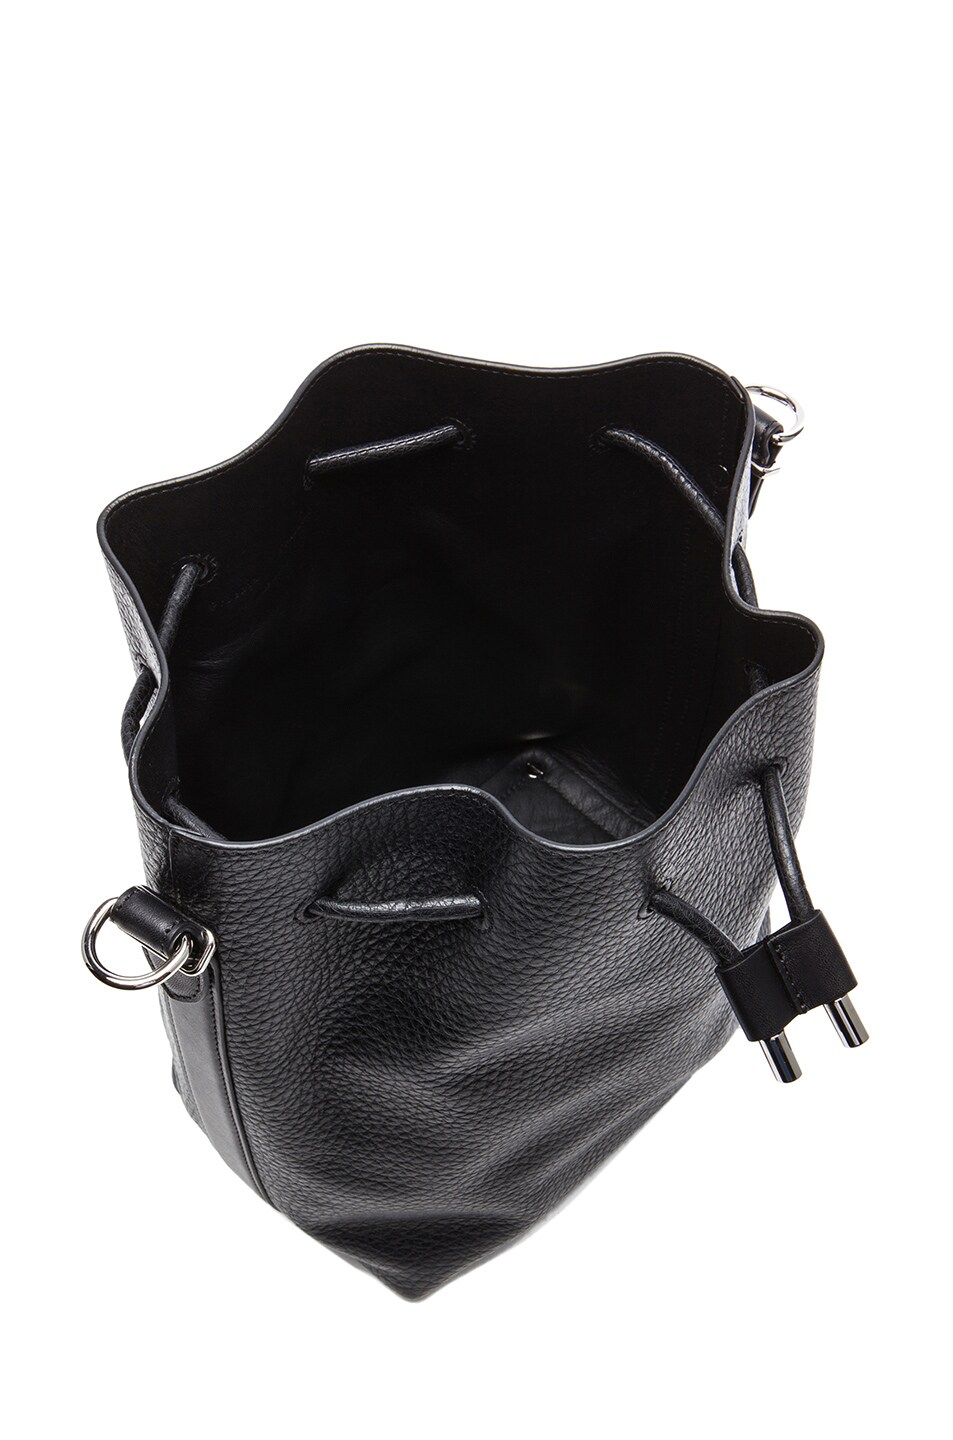 Proenza Schouler Medium Pebbled Leather Bucket Bag in Black | FWRD